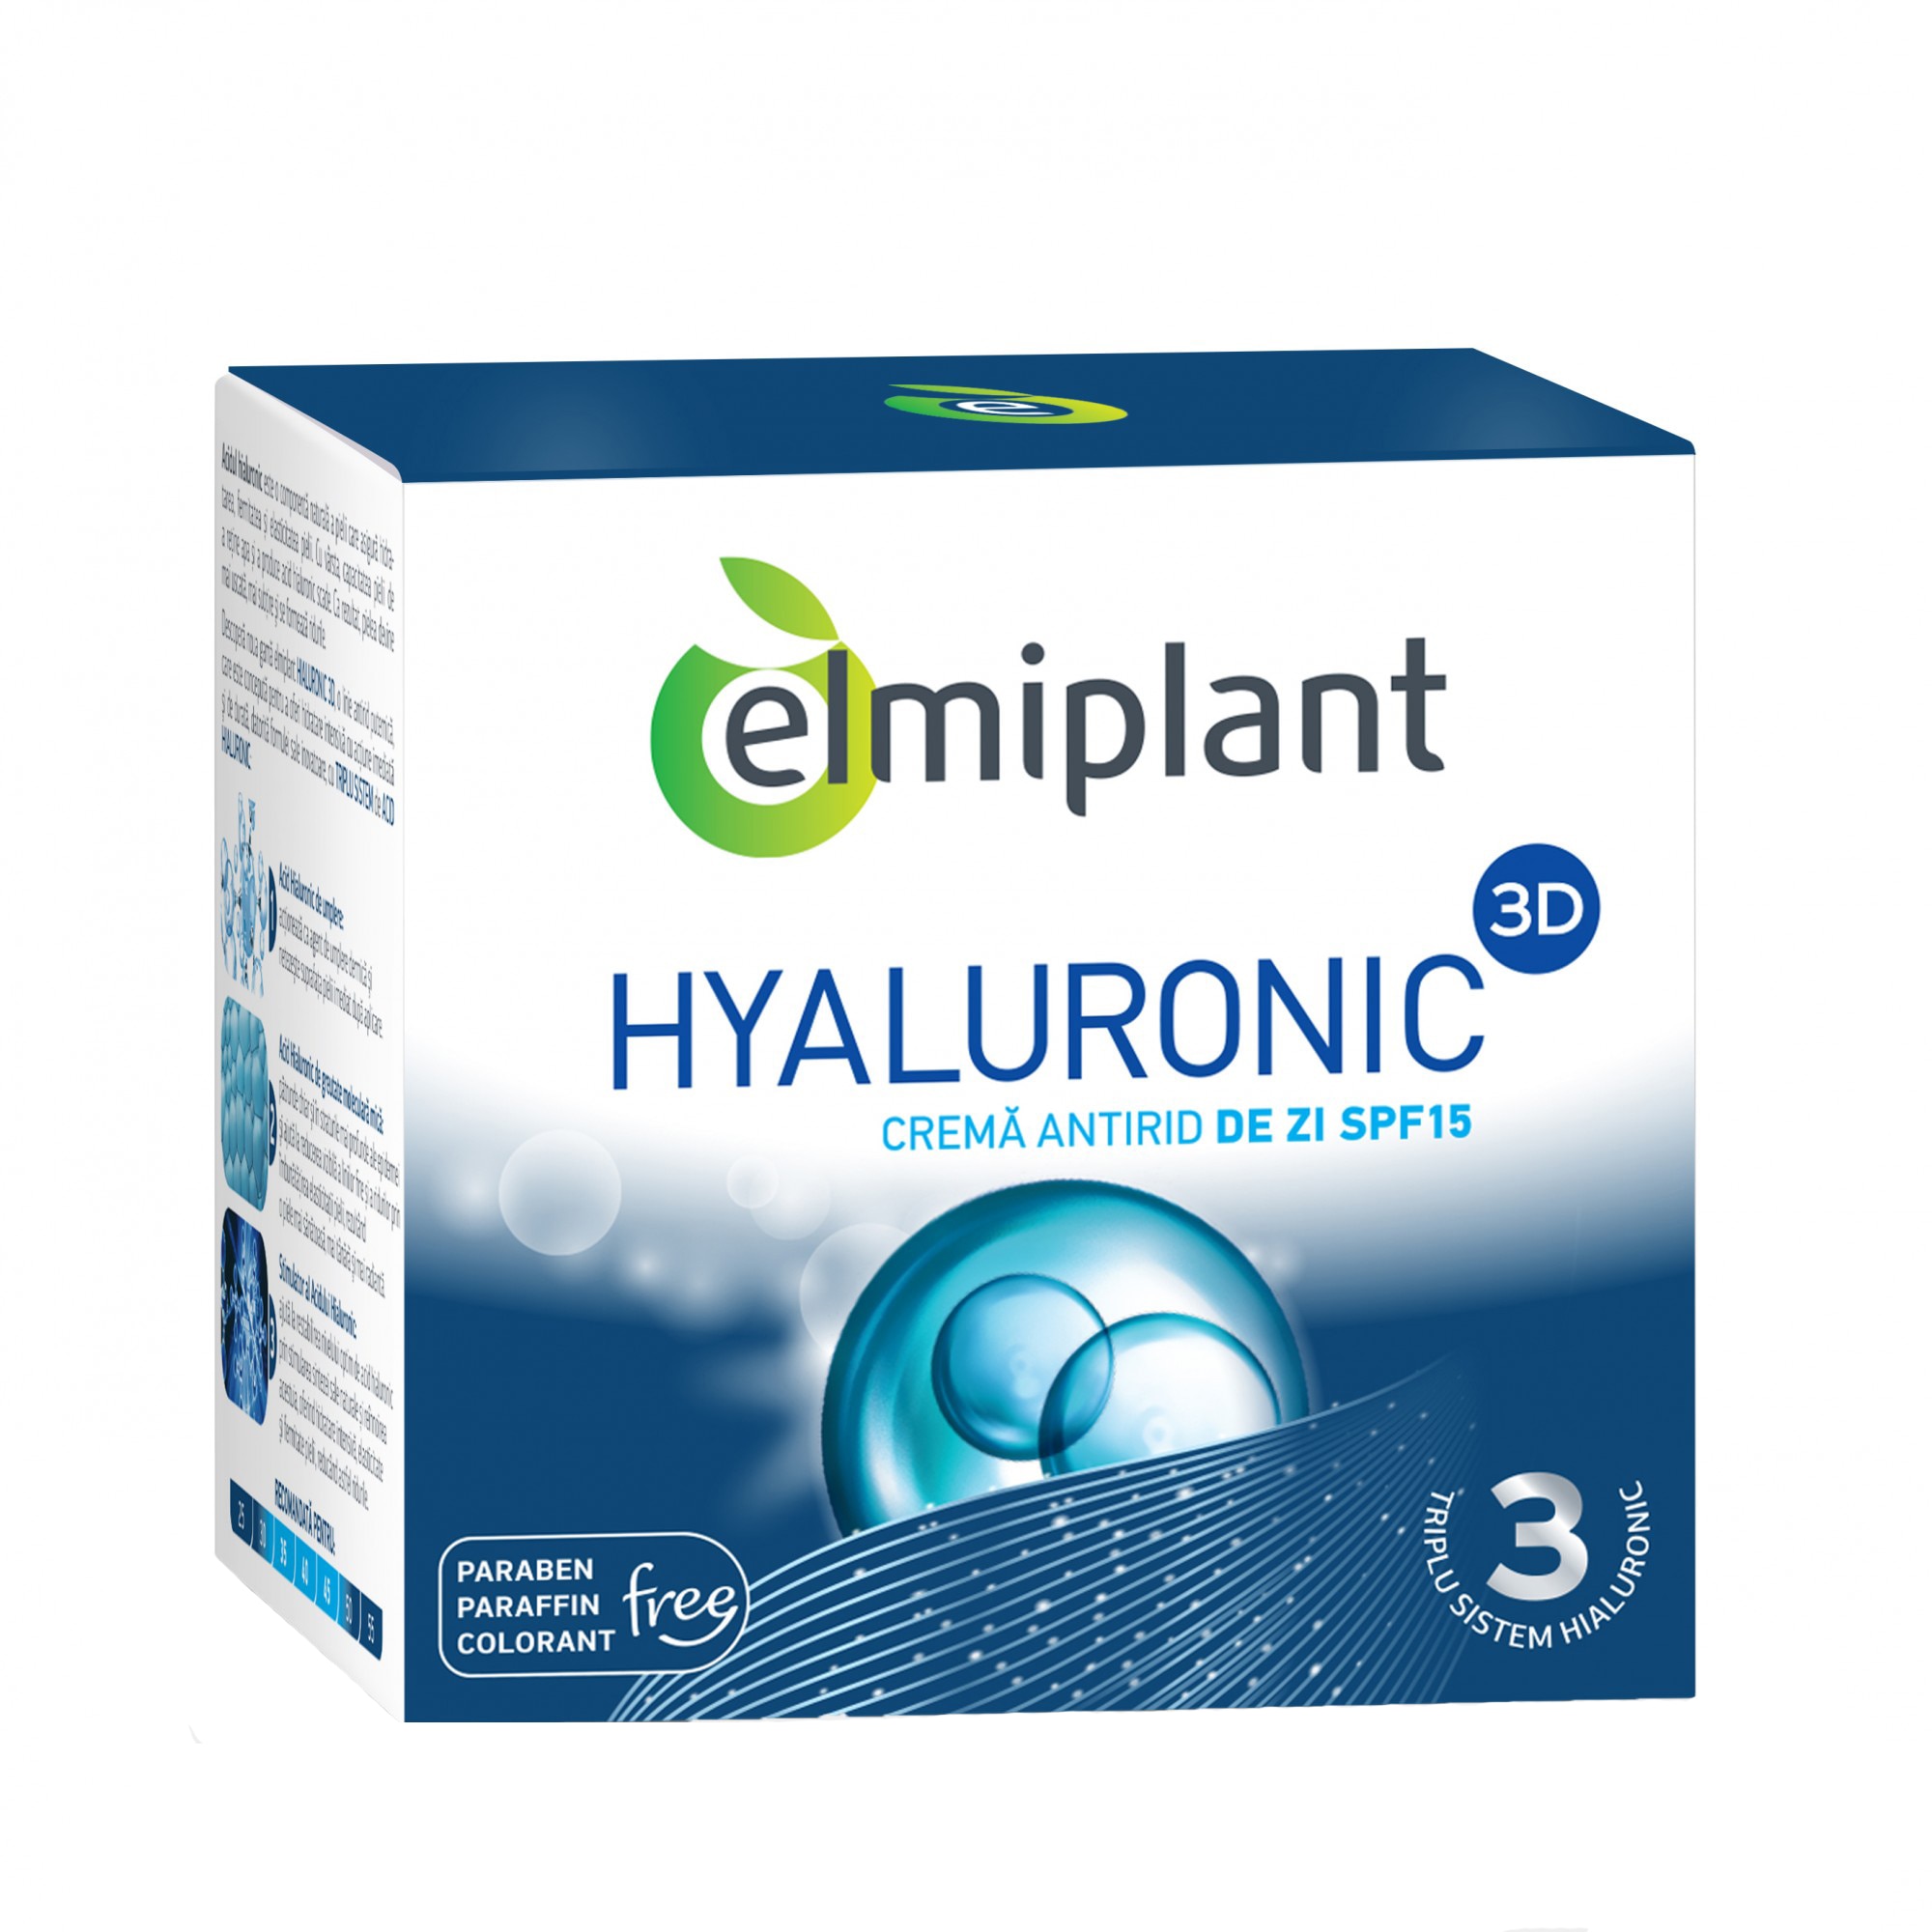 Elmiplant multicollagen serum si crema de noapte – Review